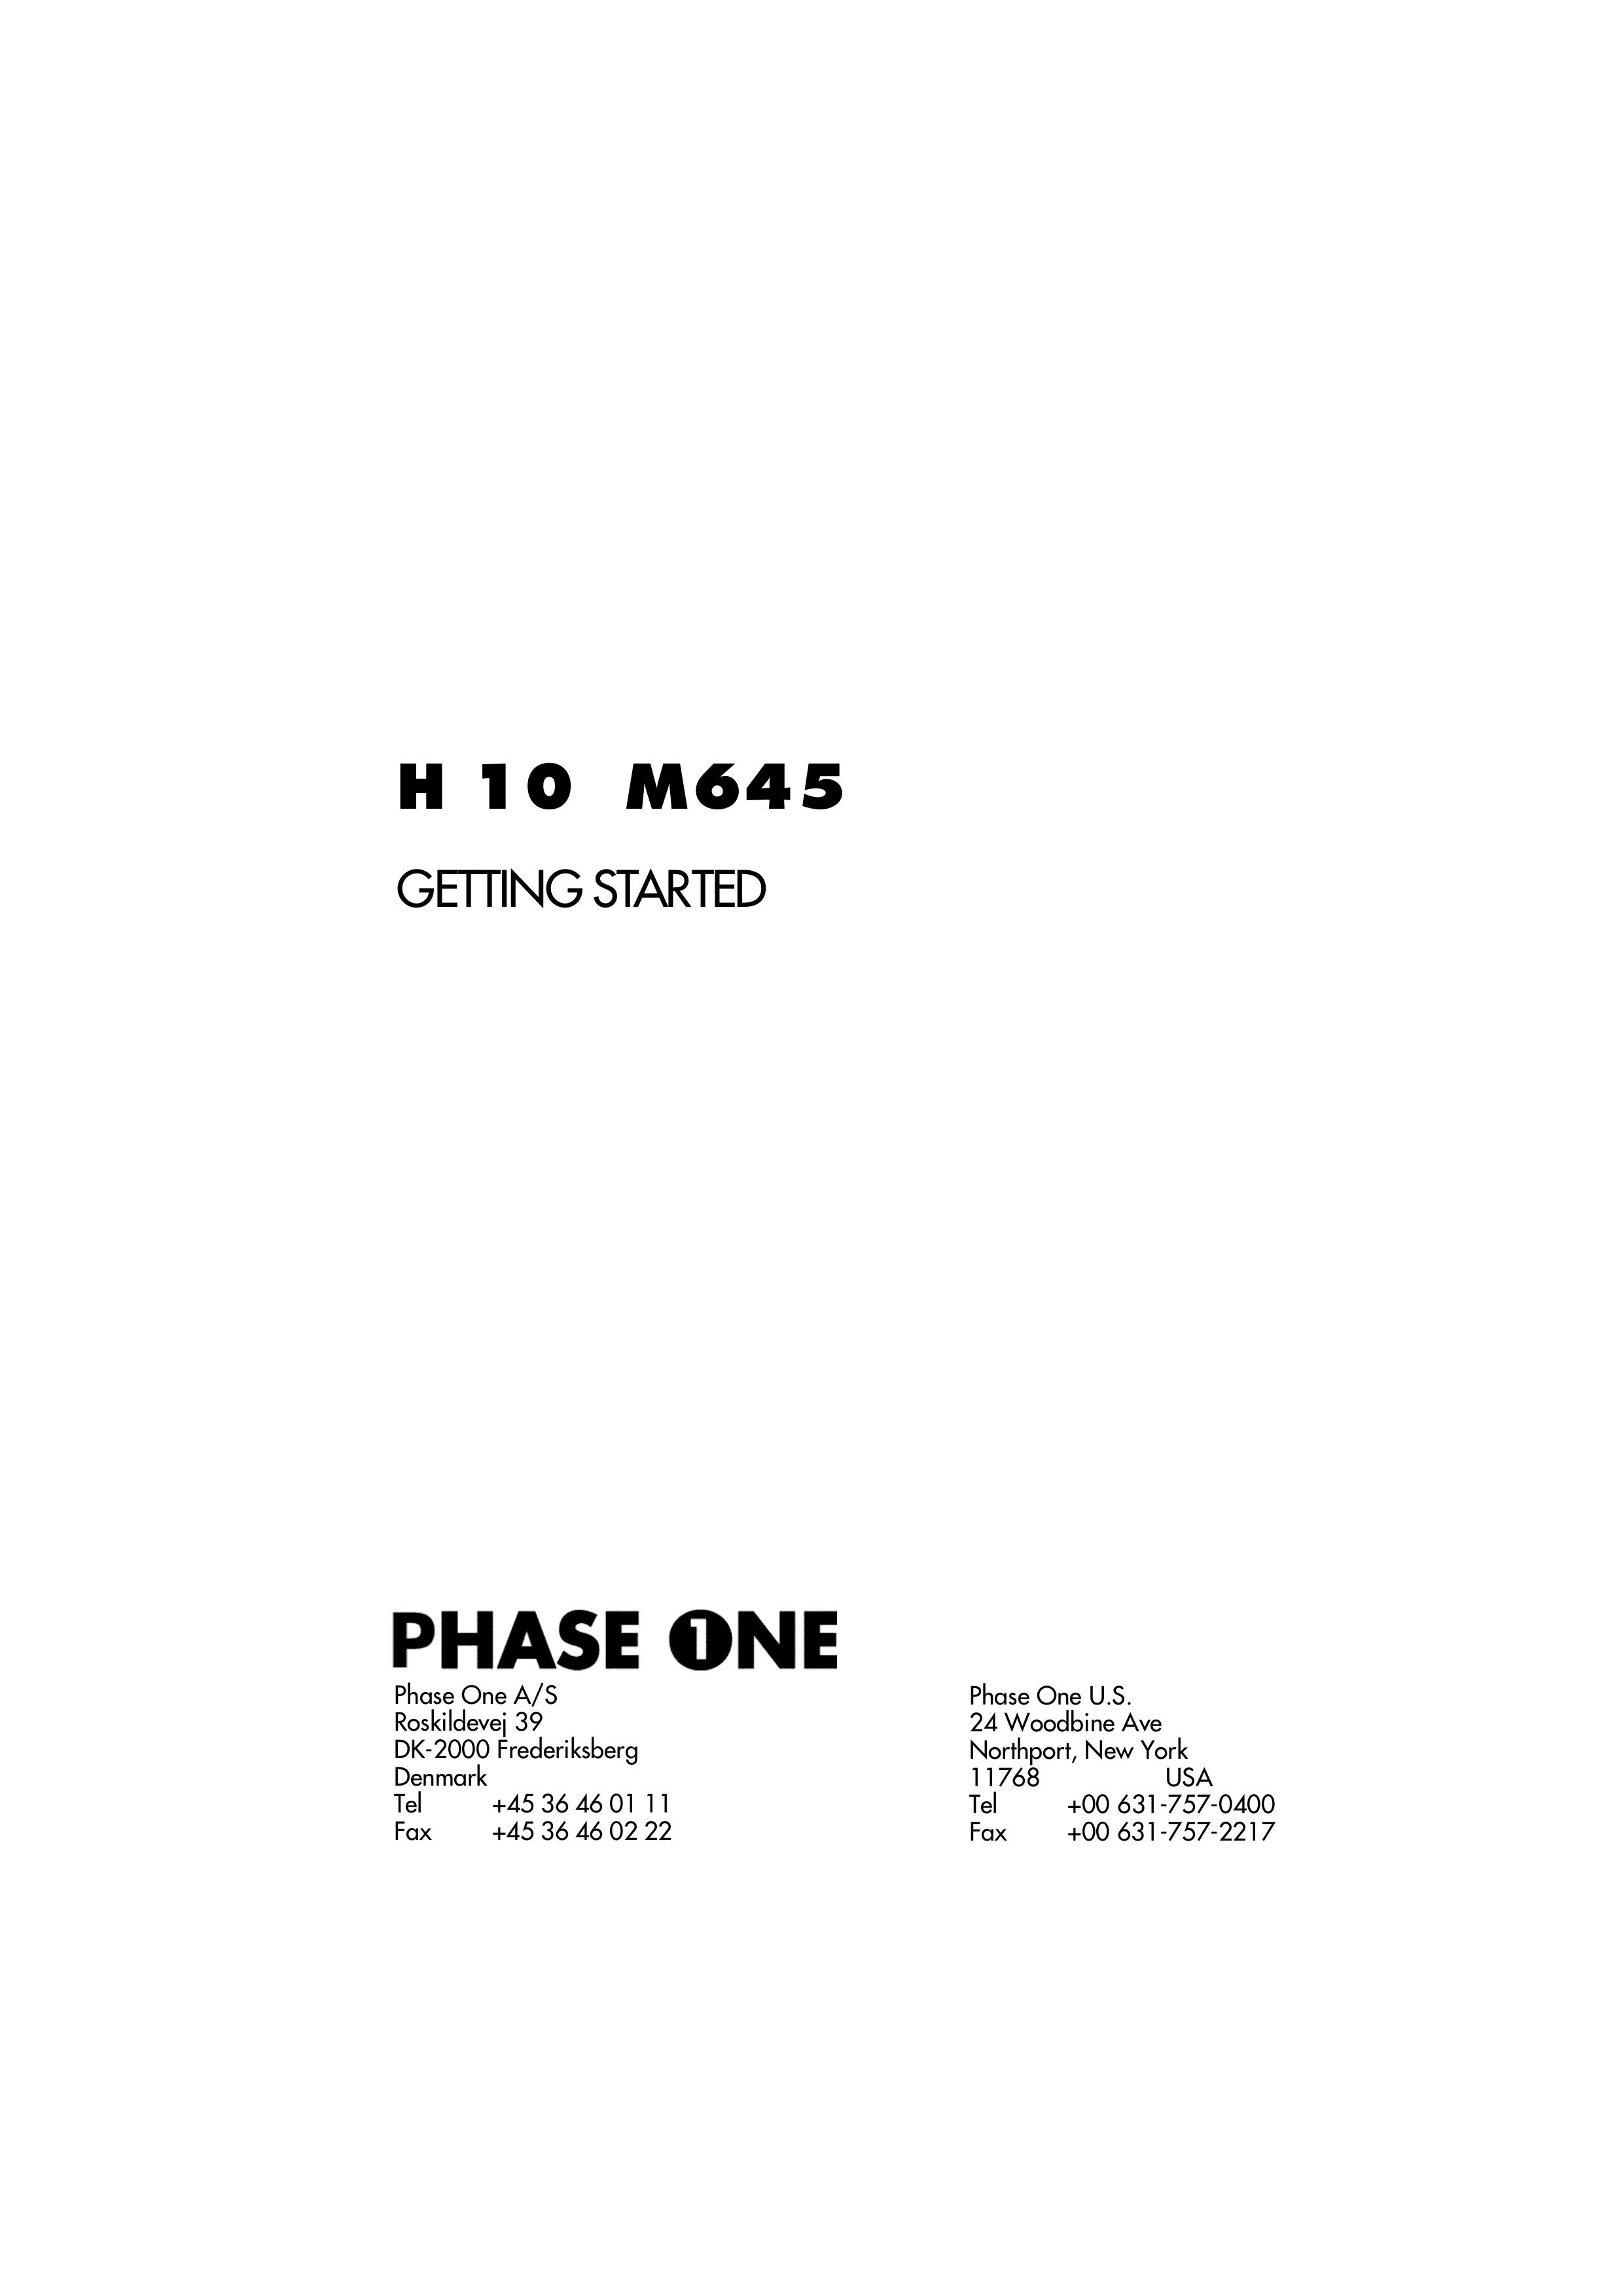 Phase One H 10 M645 Digital Camera User Manual